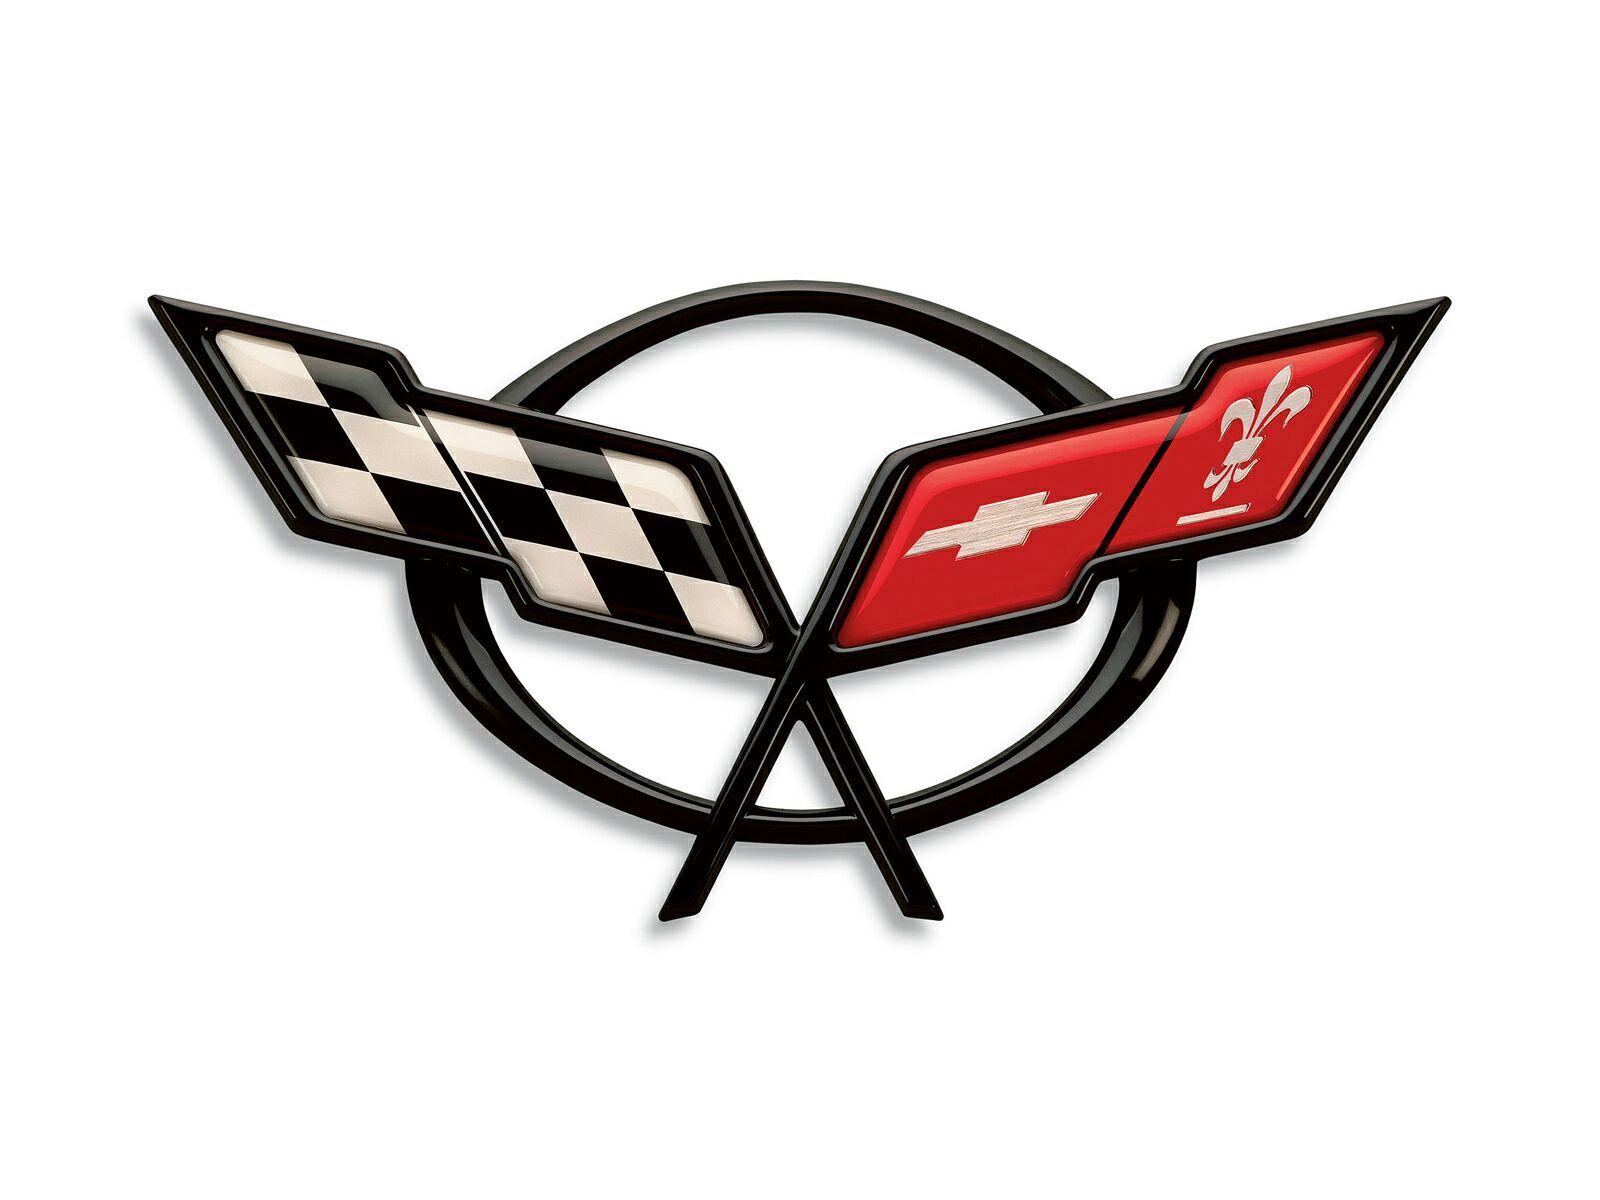 Chevy Racing Logo - Chevrolet Racing Logo - image #303